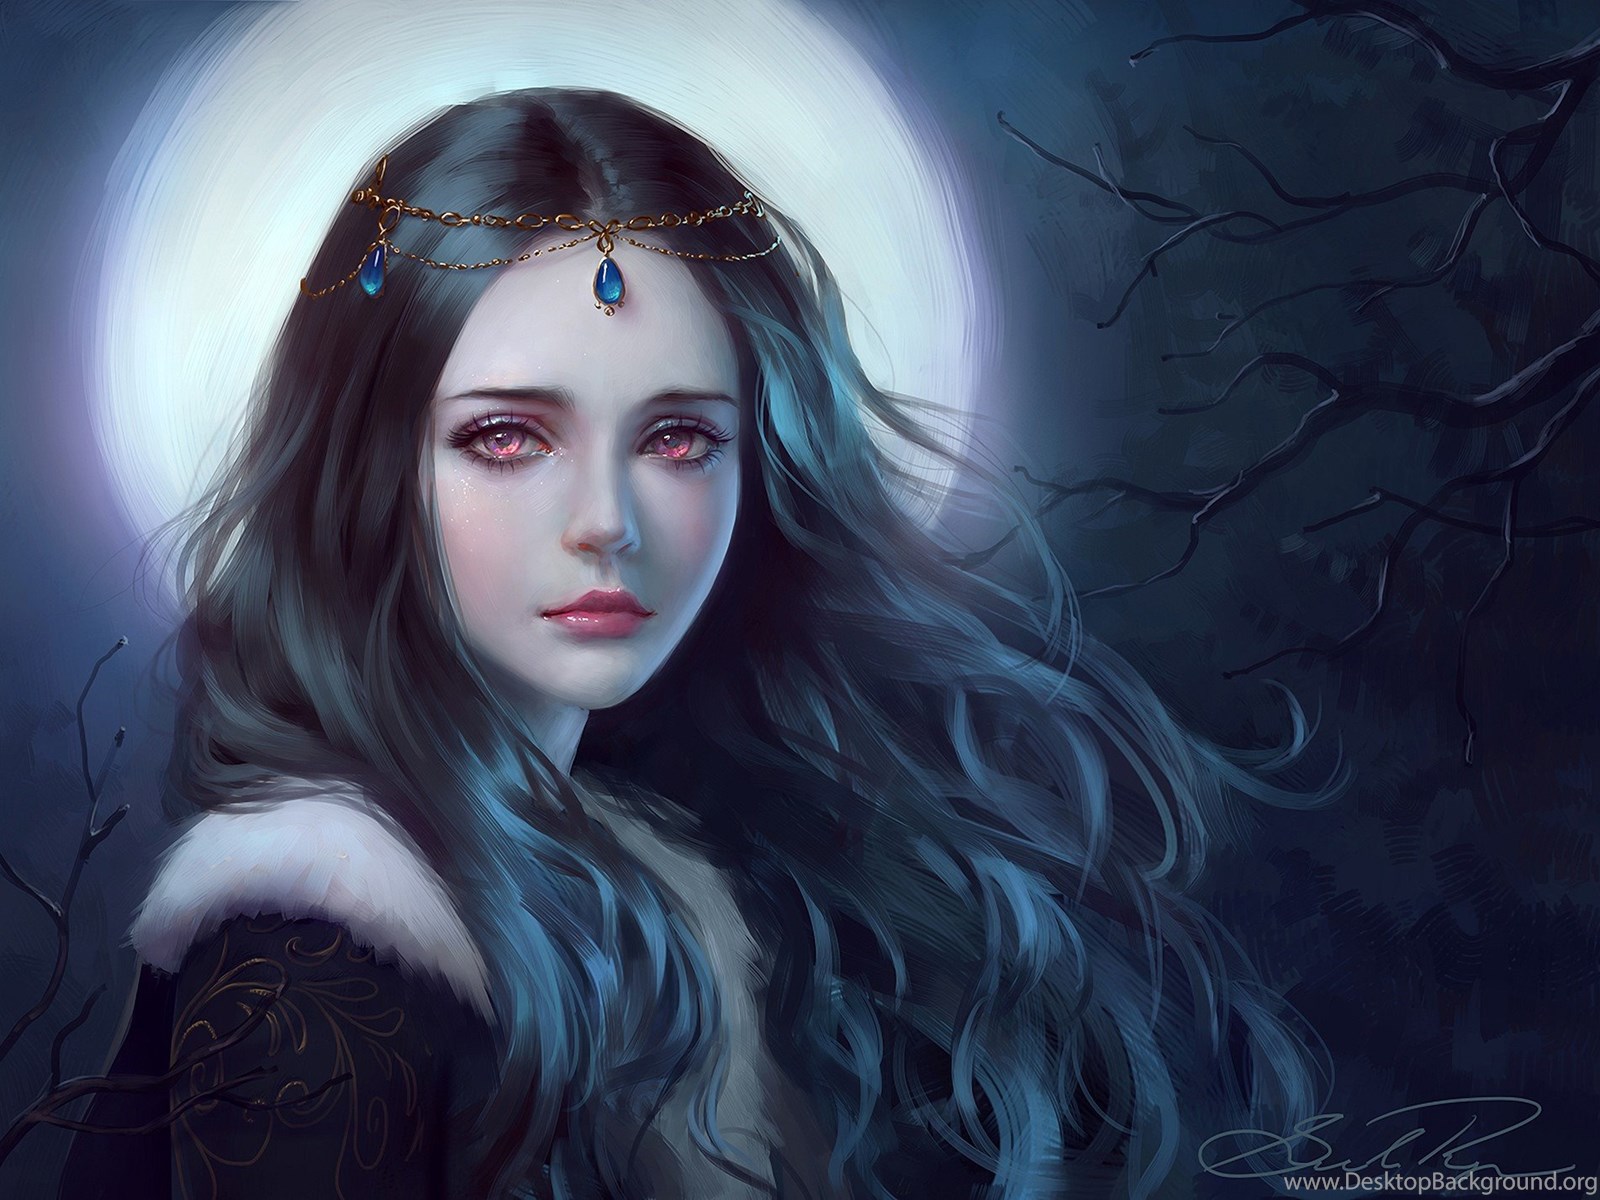 Fantasy Art, Spooky, Gothic, Woman Wallpaper, fantasy Art HD. Desktop Background